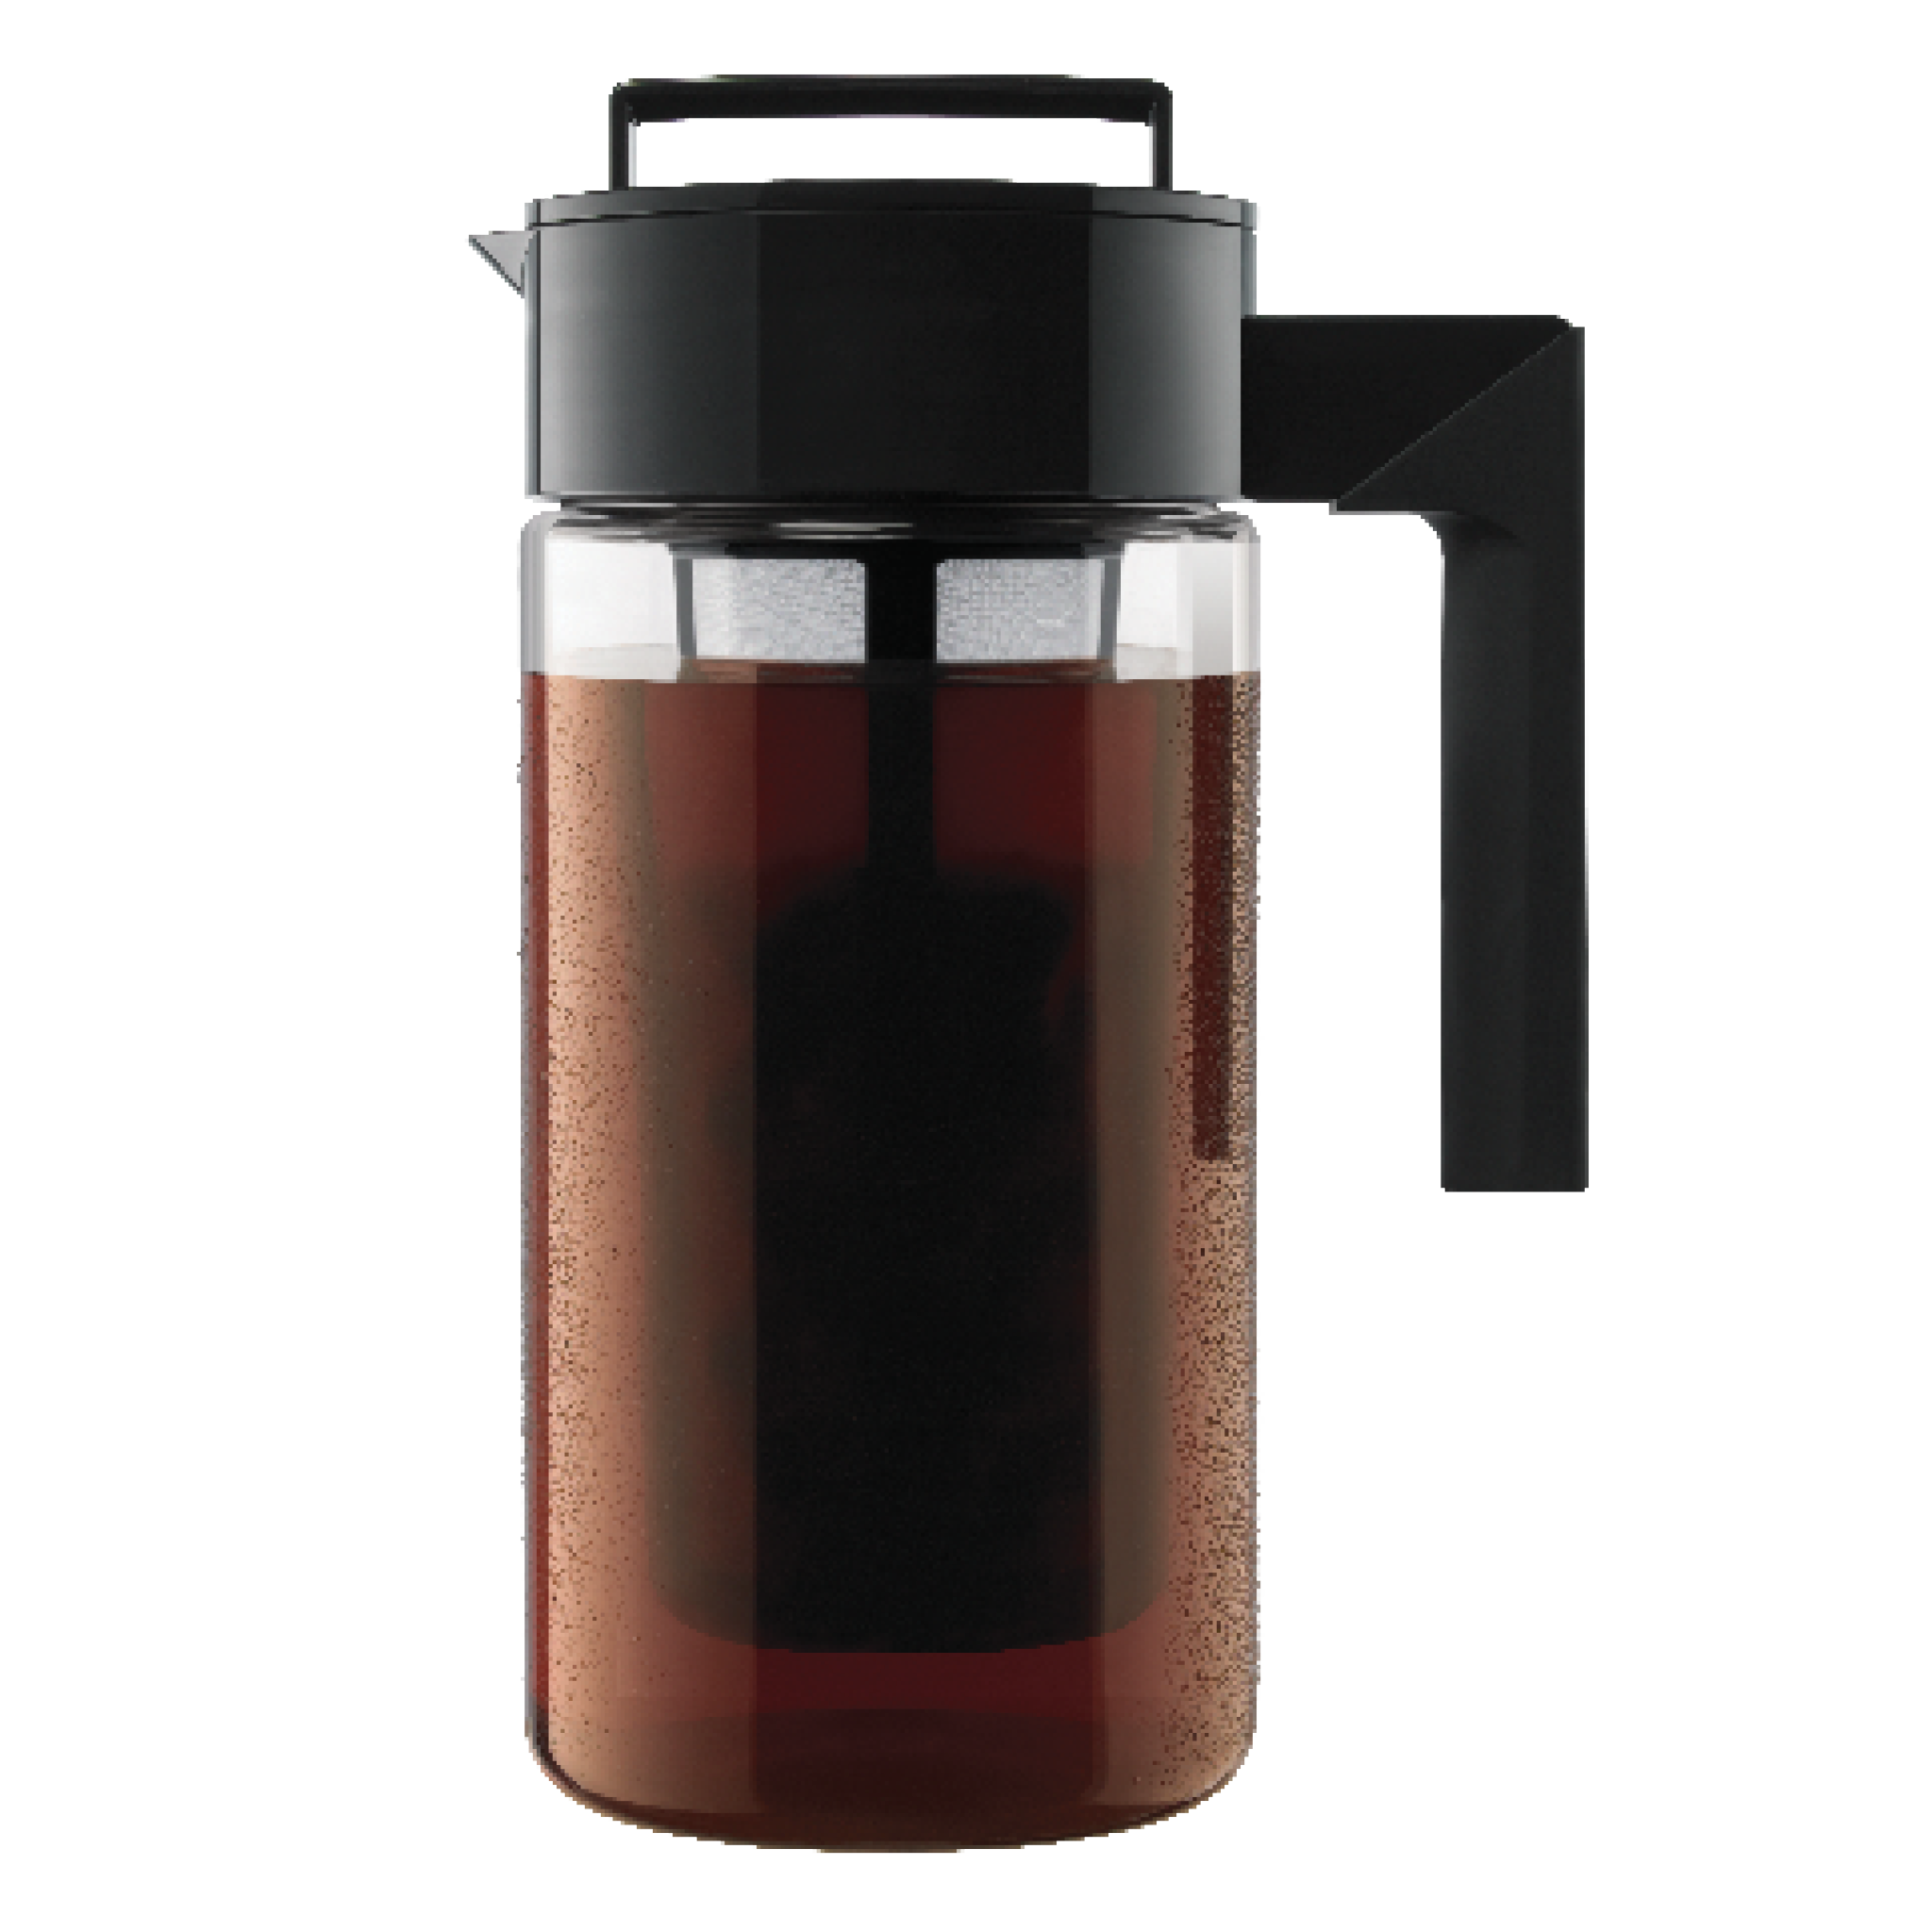 Takeya Cold Brew Tritan Plastic Coffee Maker Pitcher with Airtight Lid, 1 Quart, Black - image 1 of 7